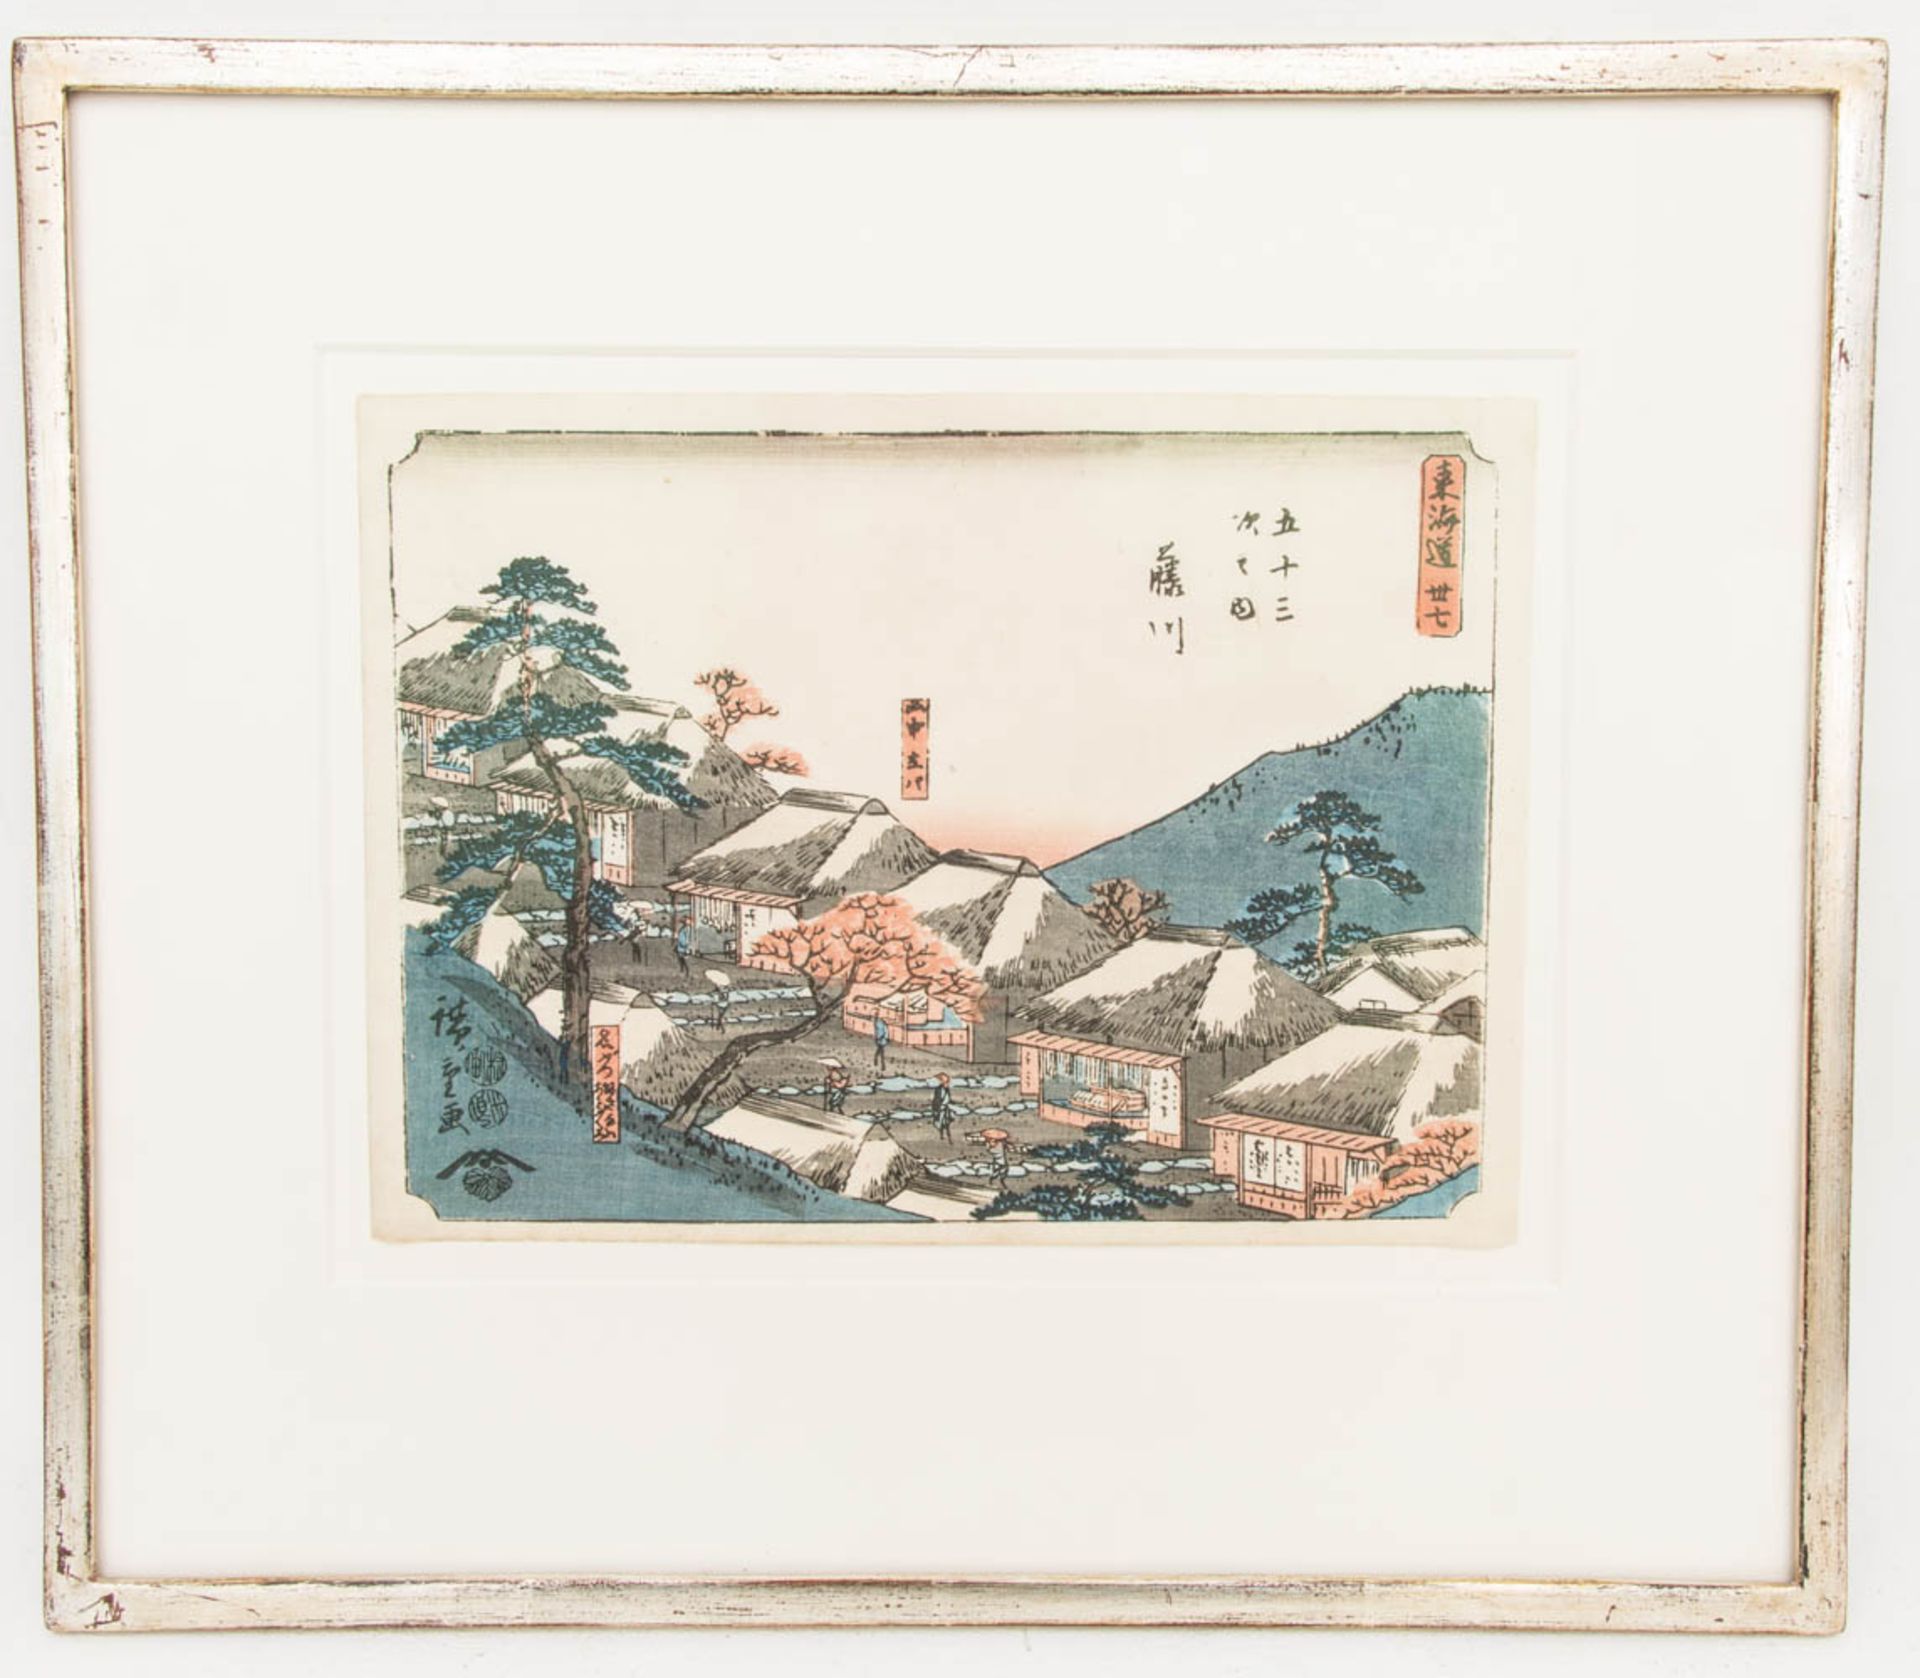 Ando Hiroshige I., wohl Station 37 Fujigawa, aus der Serie Tokaido, kolorierter Druck, Anfang 19